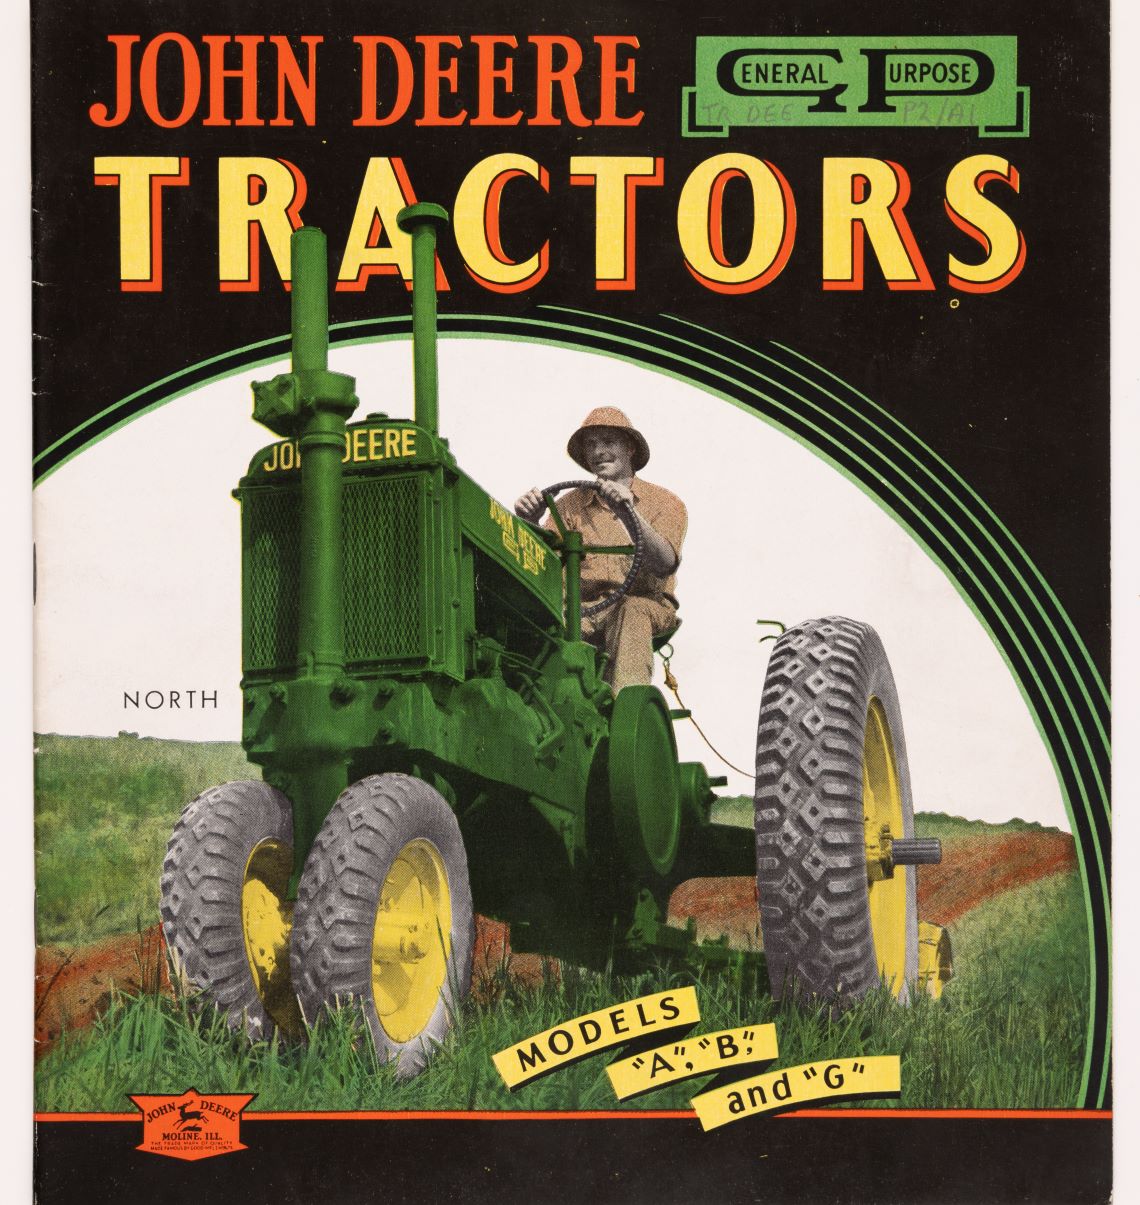 Deere booklet for tractor blog